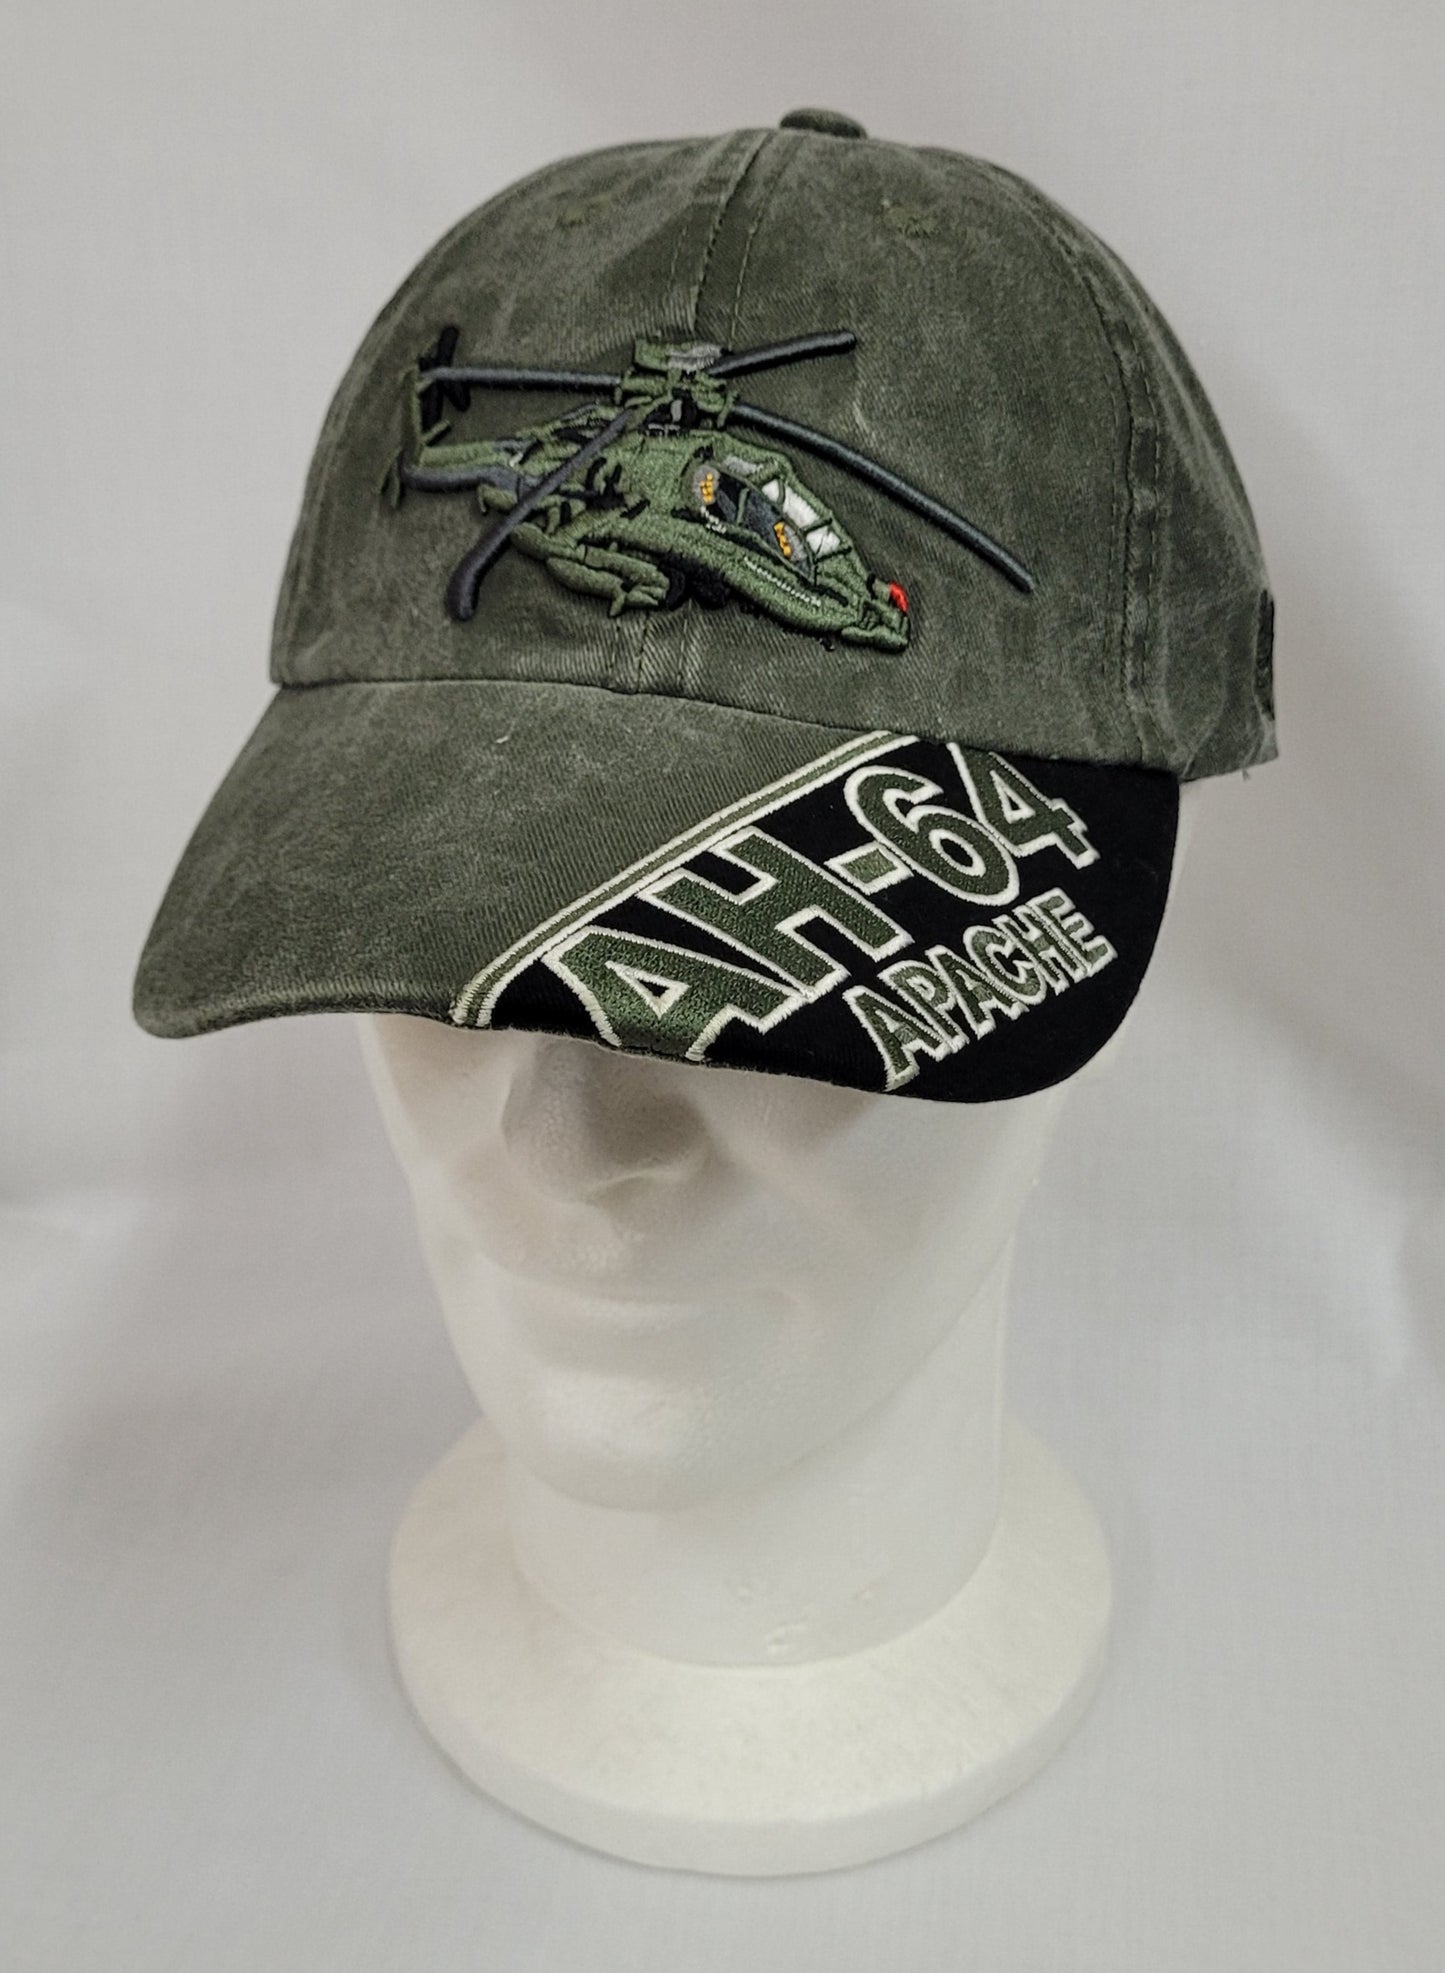 Cappello AH-64 Apache verde